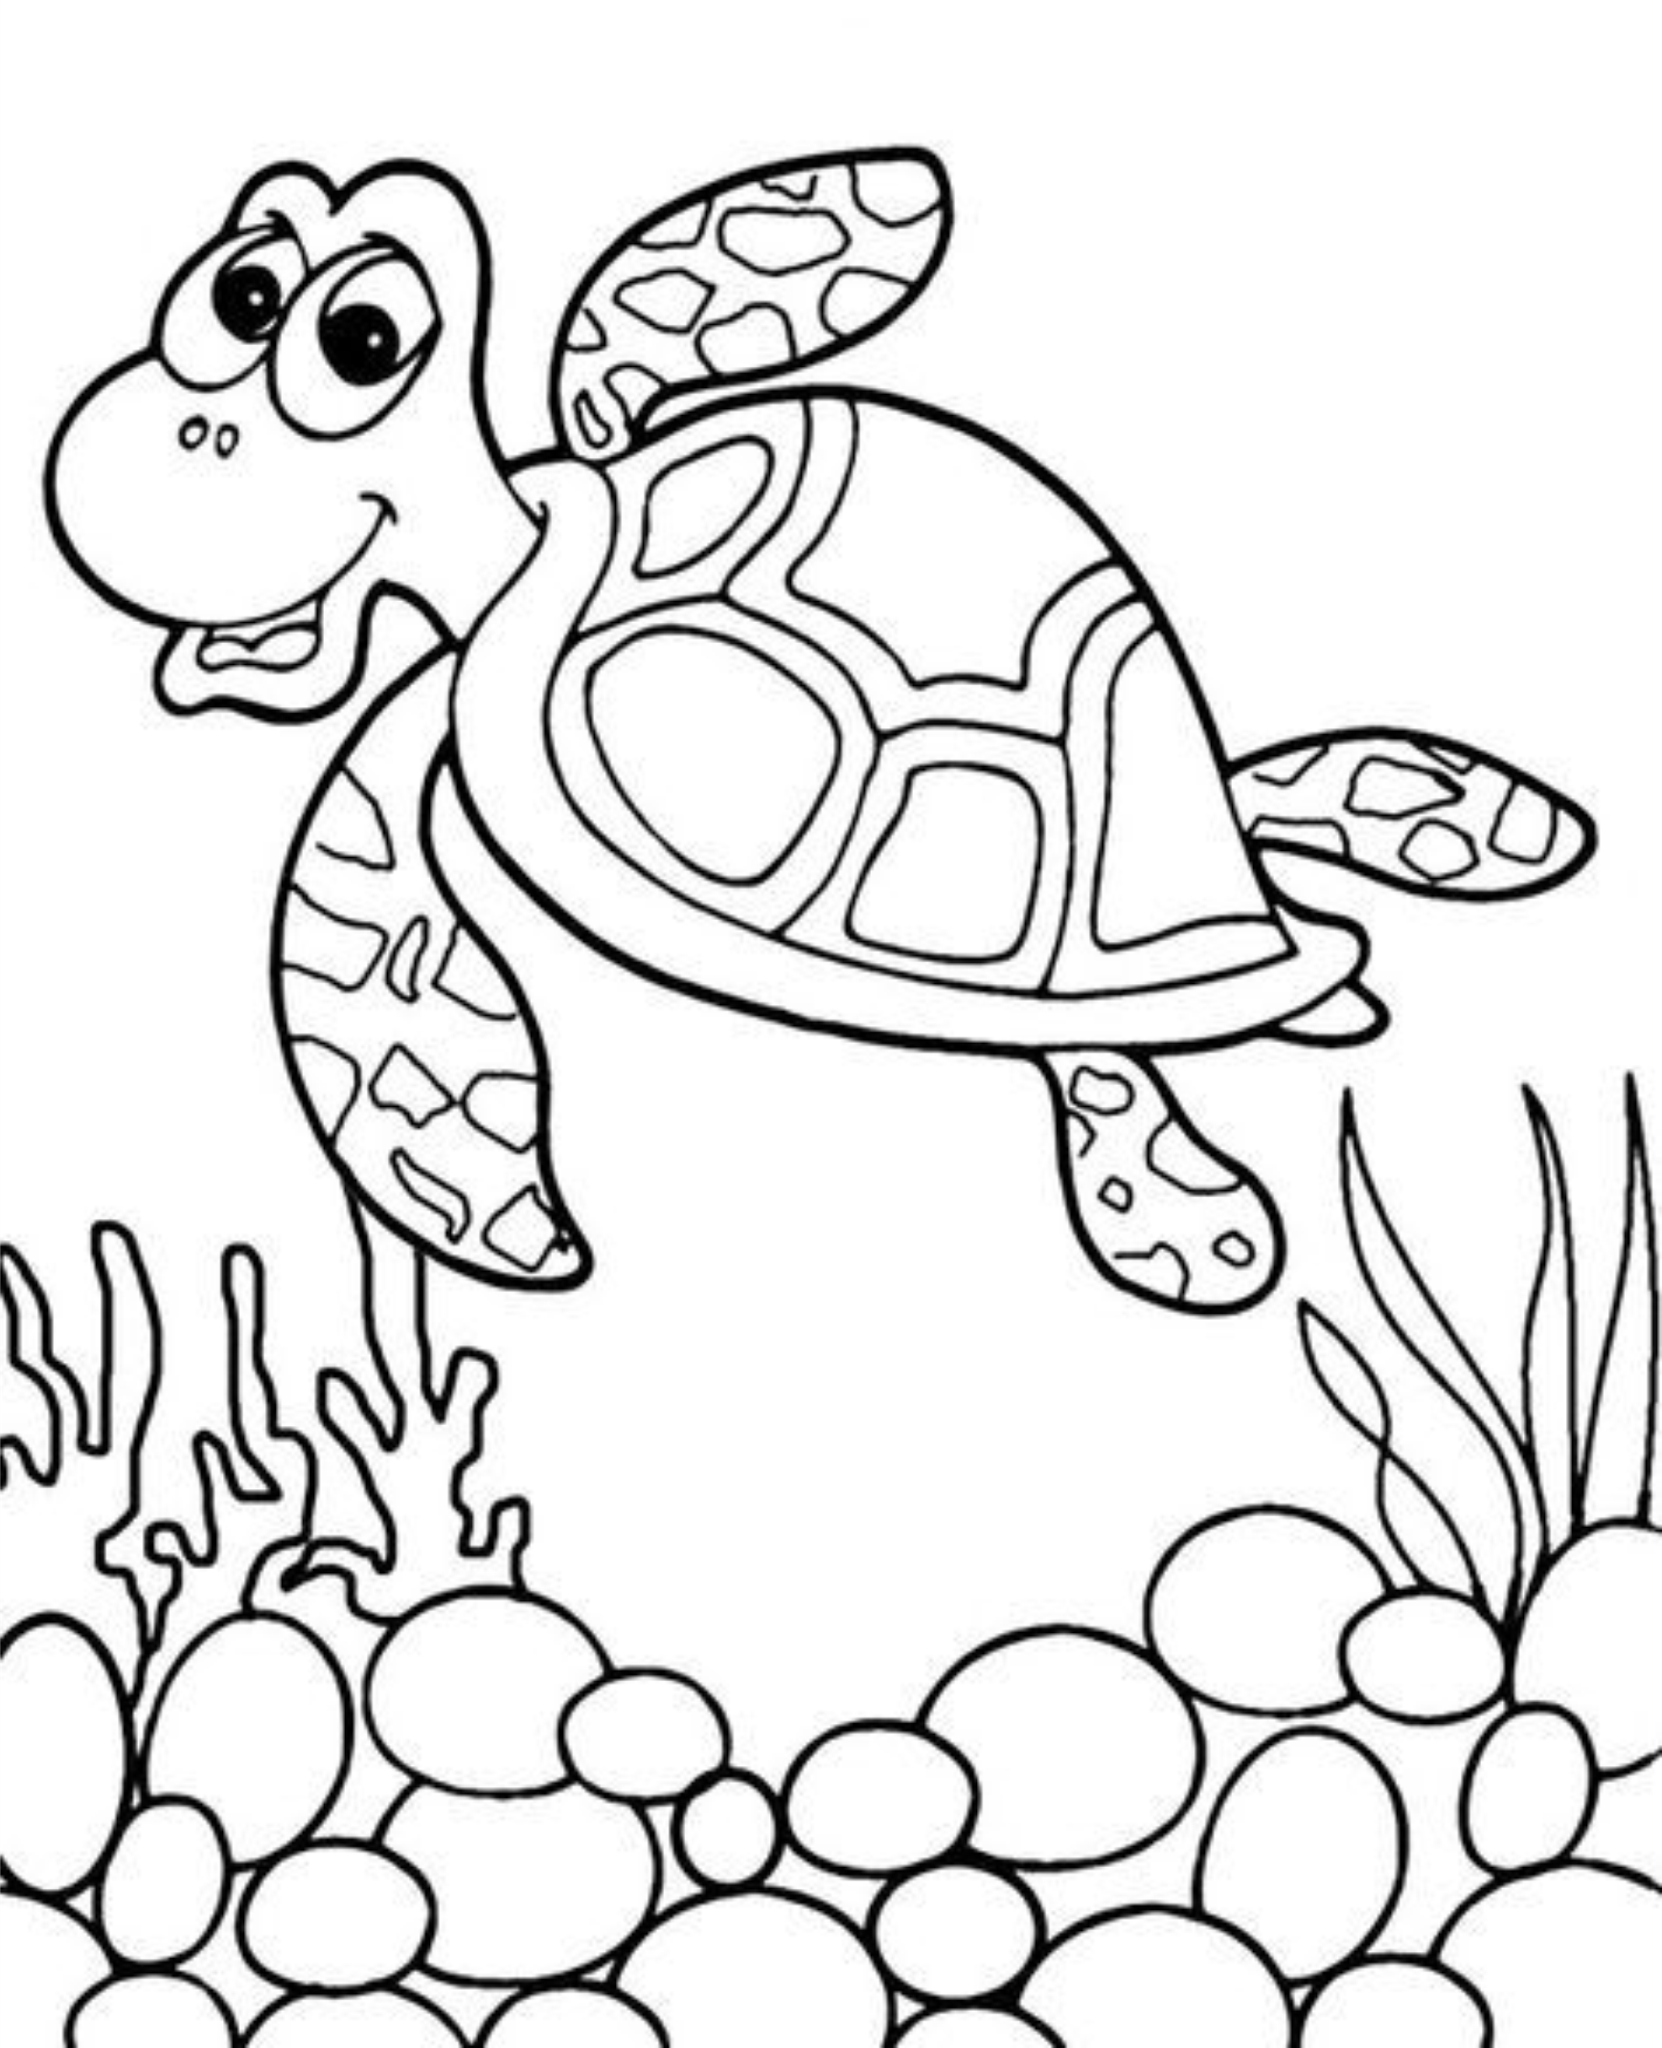 Turtle coloring. Черепаха раскраска. Черепаха раскраска для детей. Черепашка раскраска для малышей. Раскраска черепашка для детей 3-4 лет.